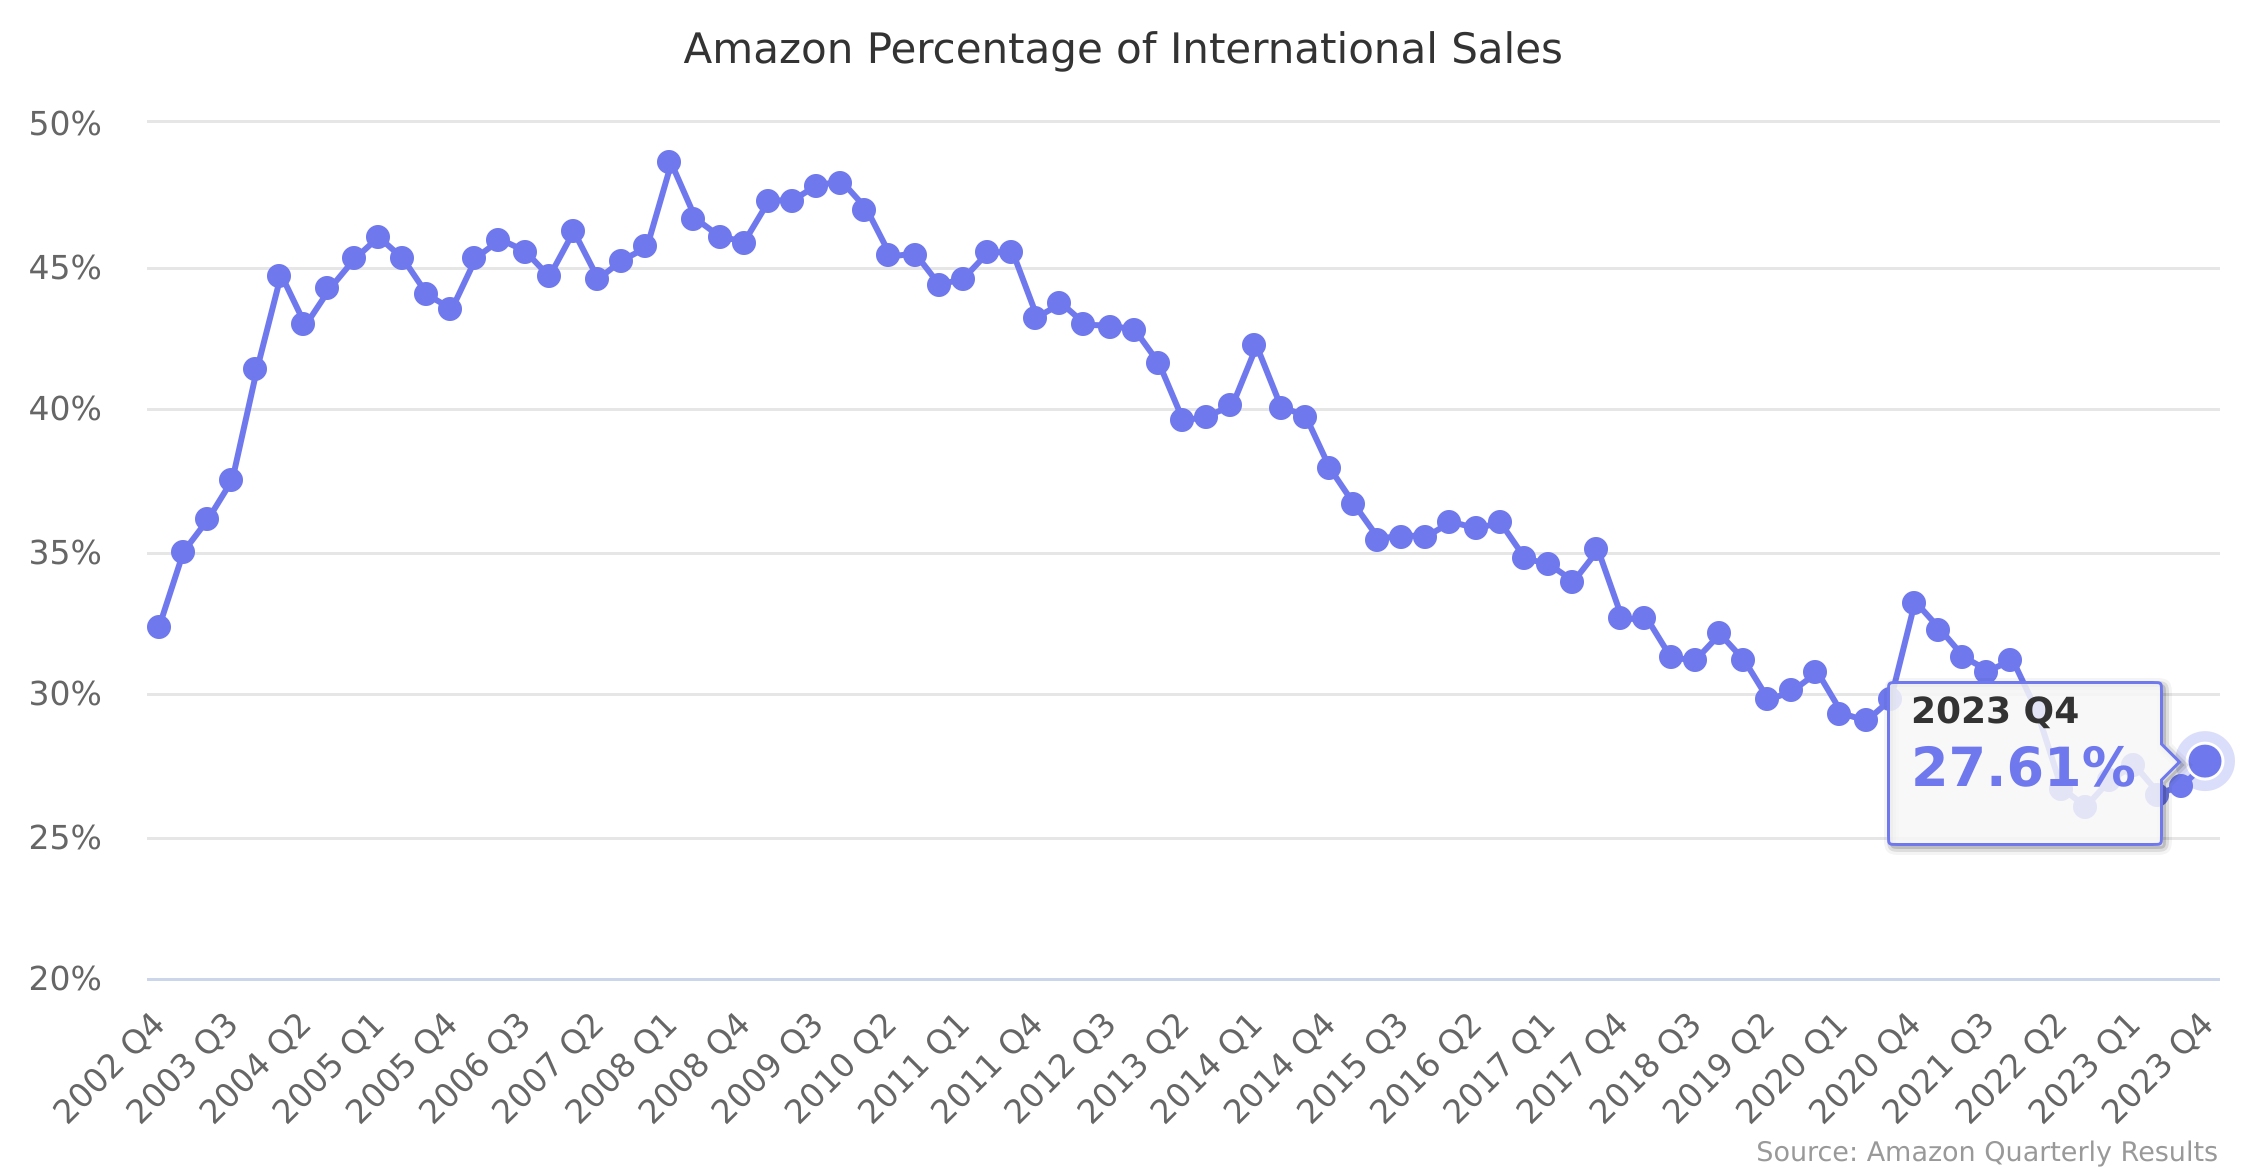 Amazon Percentage of International Sales 2002-2022